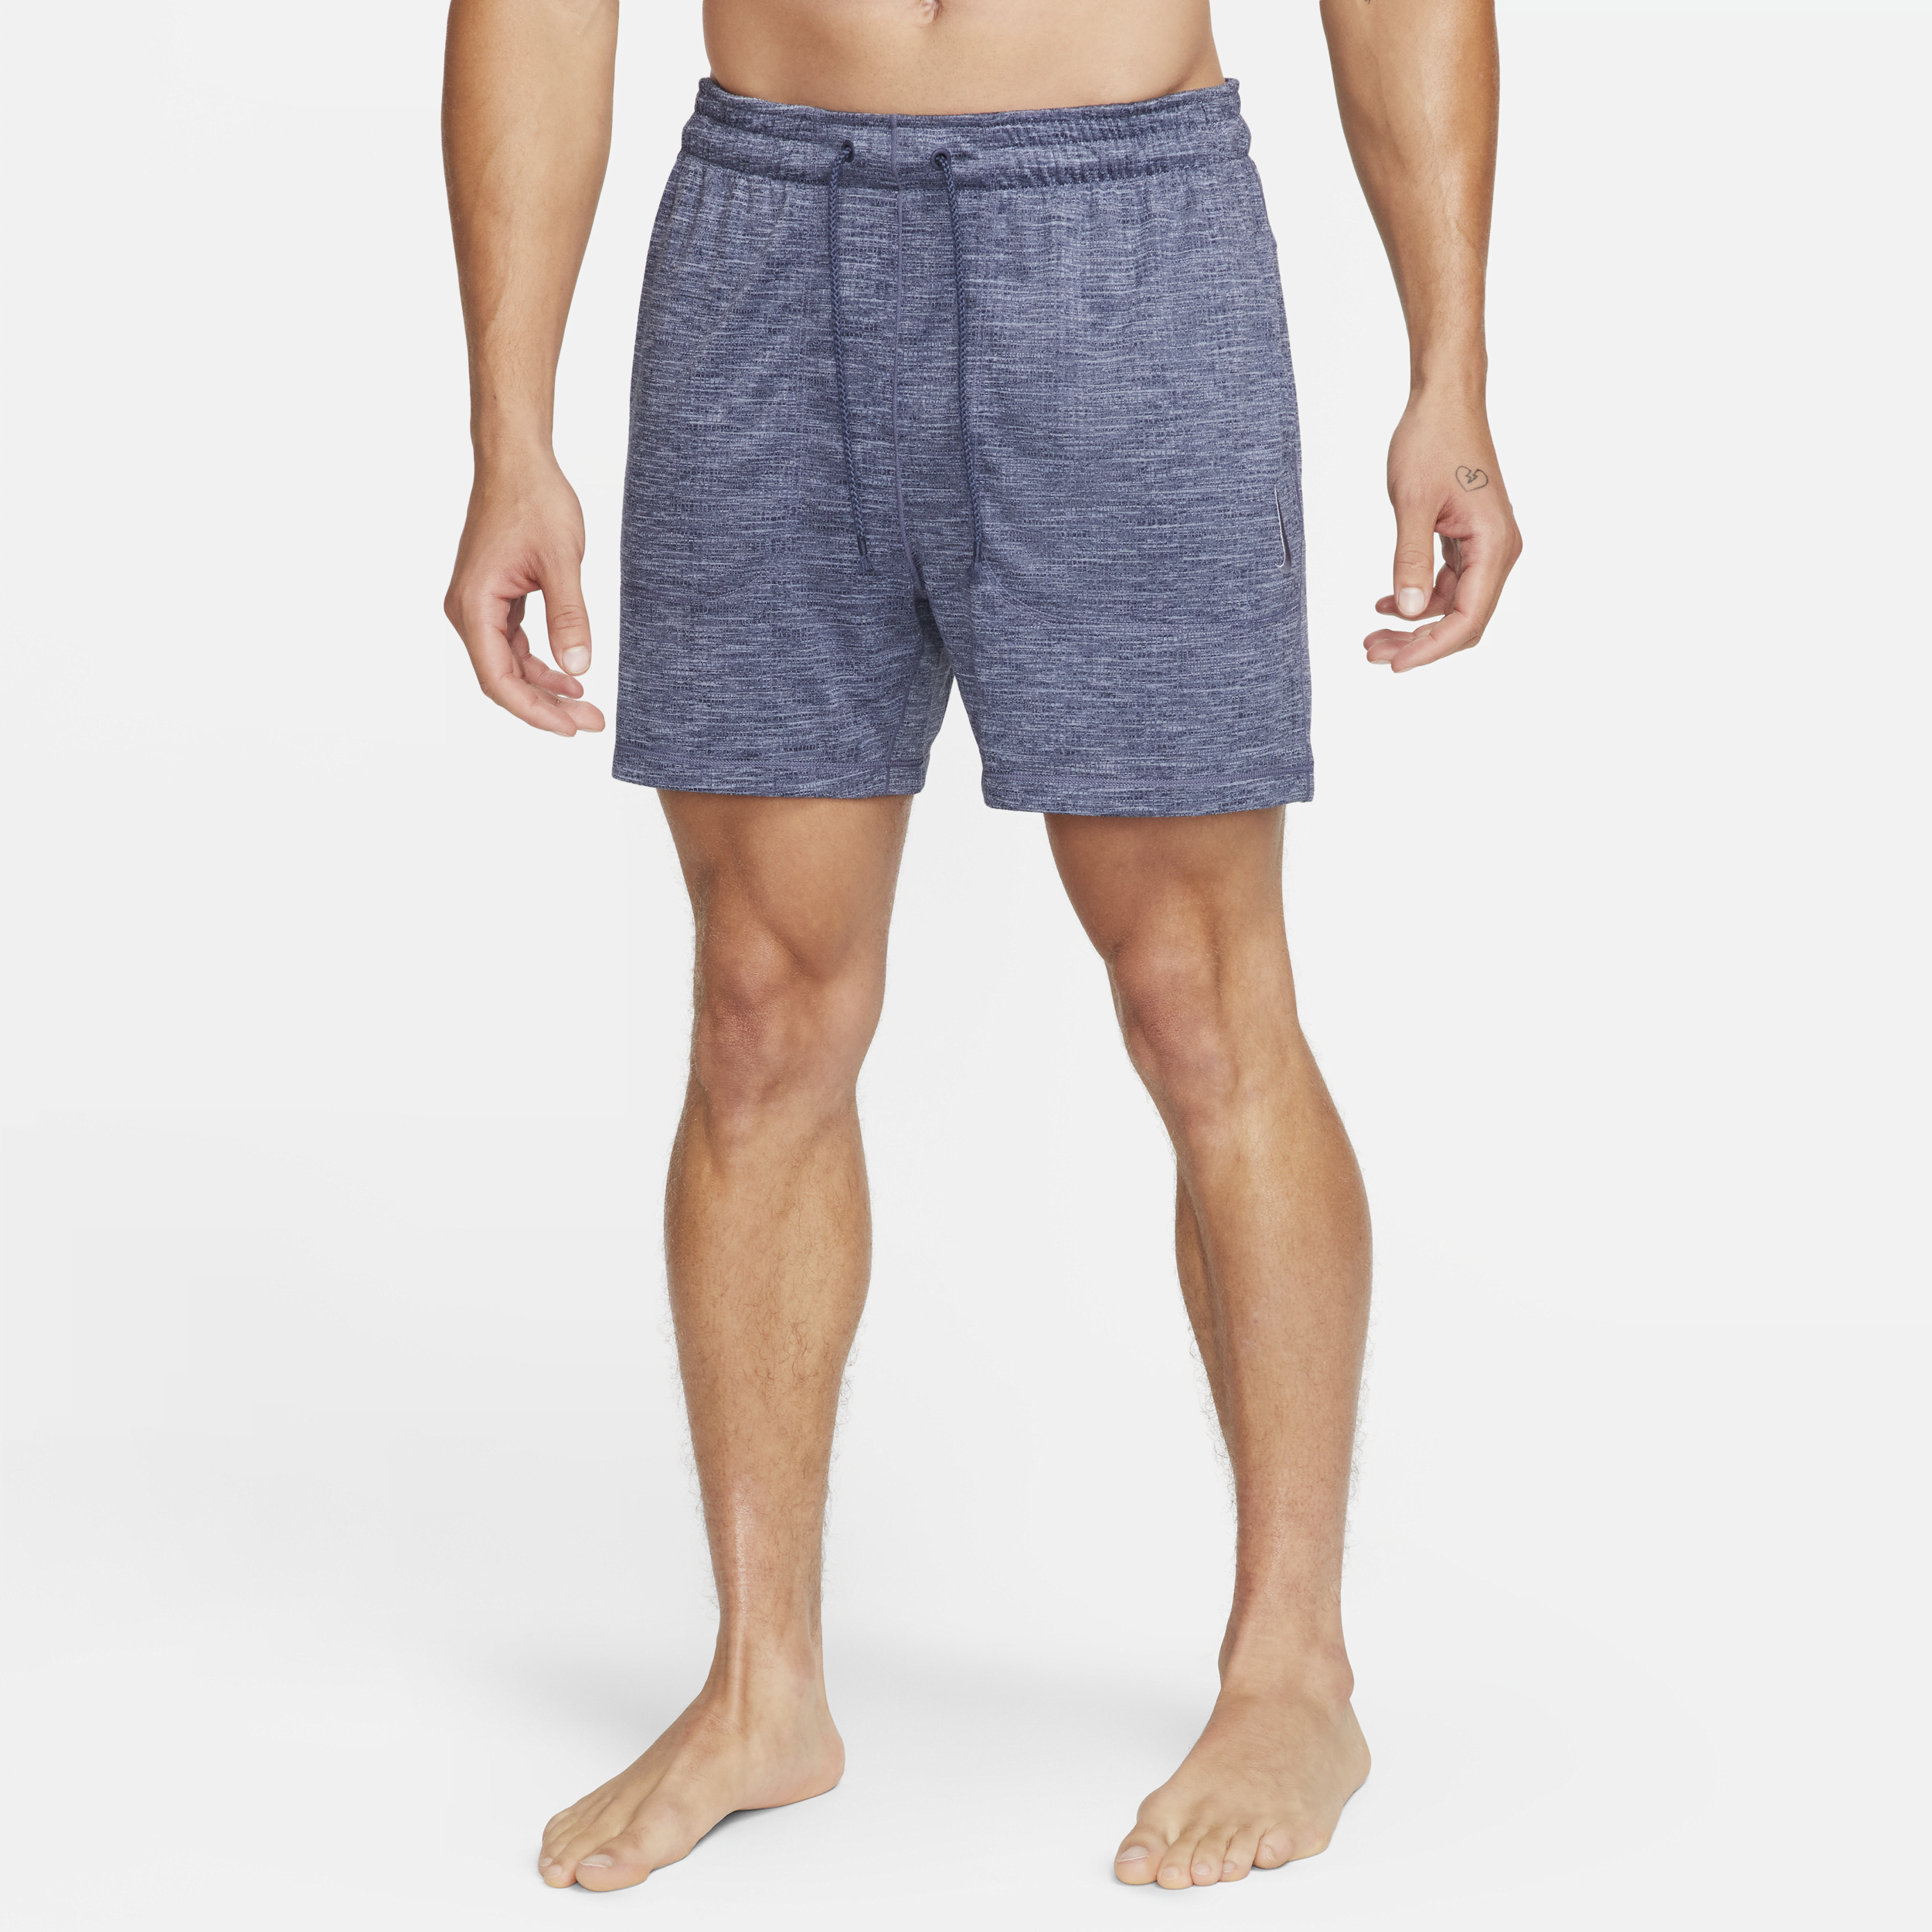 Shorts Dri-FIT non foderati 13 cm Nike Yoga – Uomo - Blu